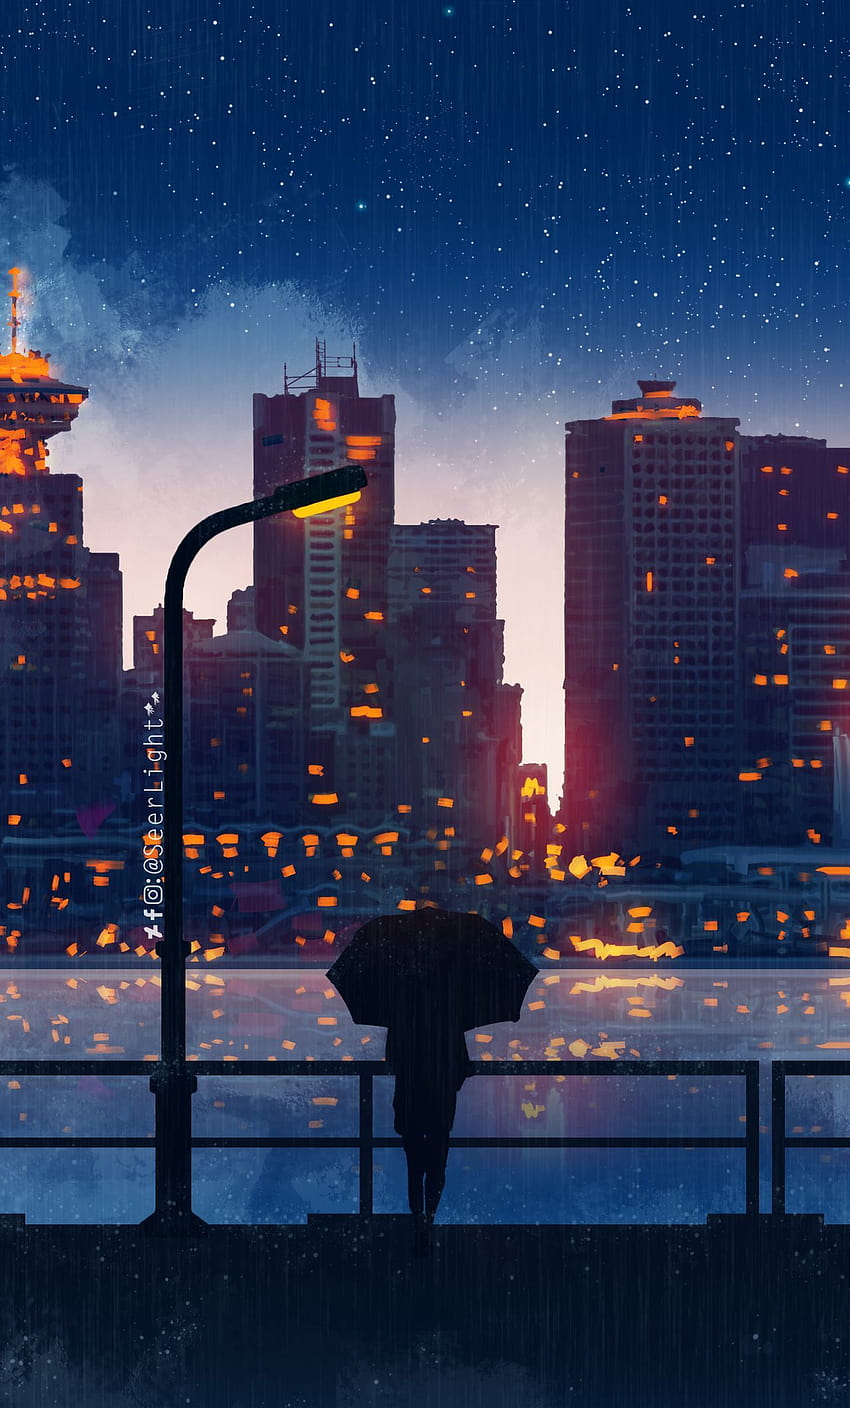 Premium Photo | Fantasy anime female digital art illustration gazing up at  the sky in a nighttime landscape